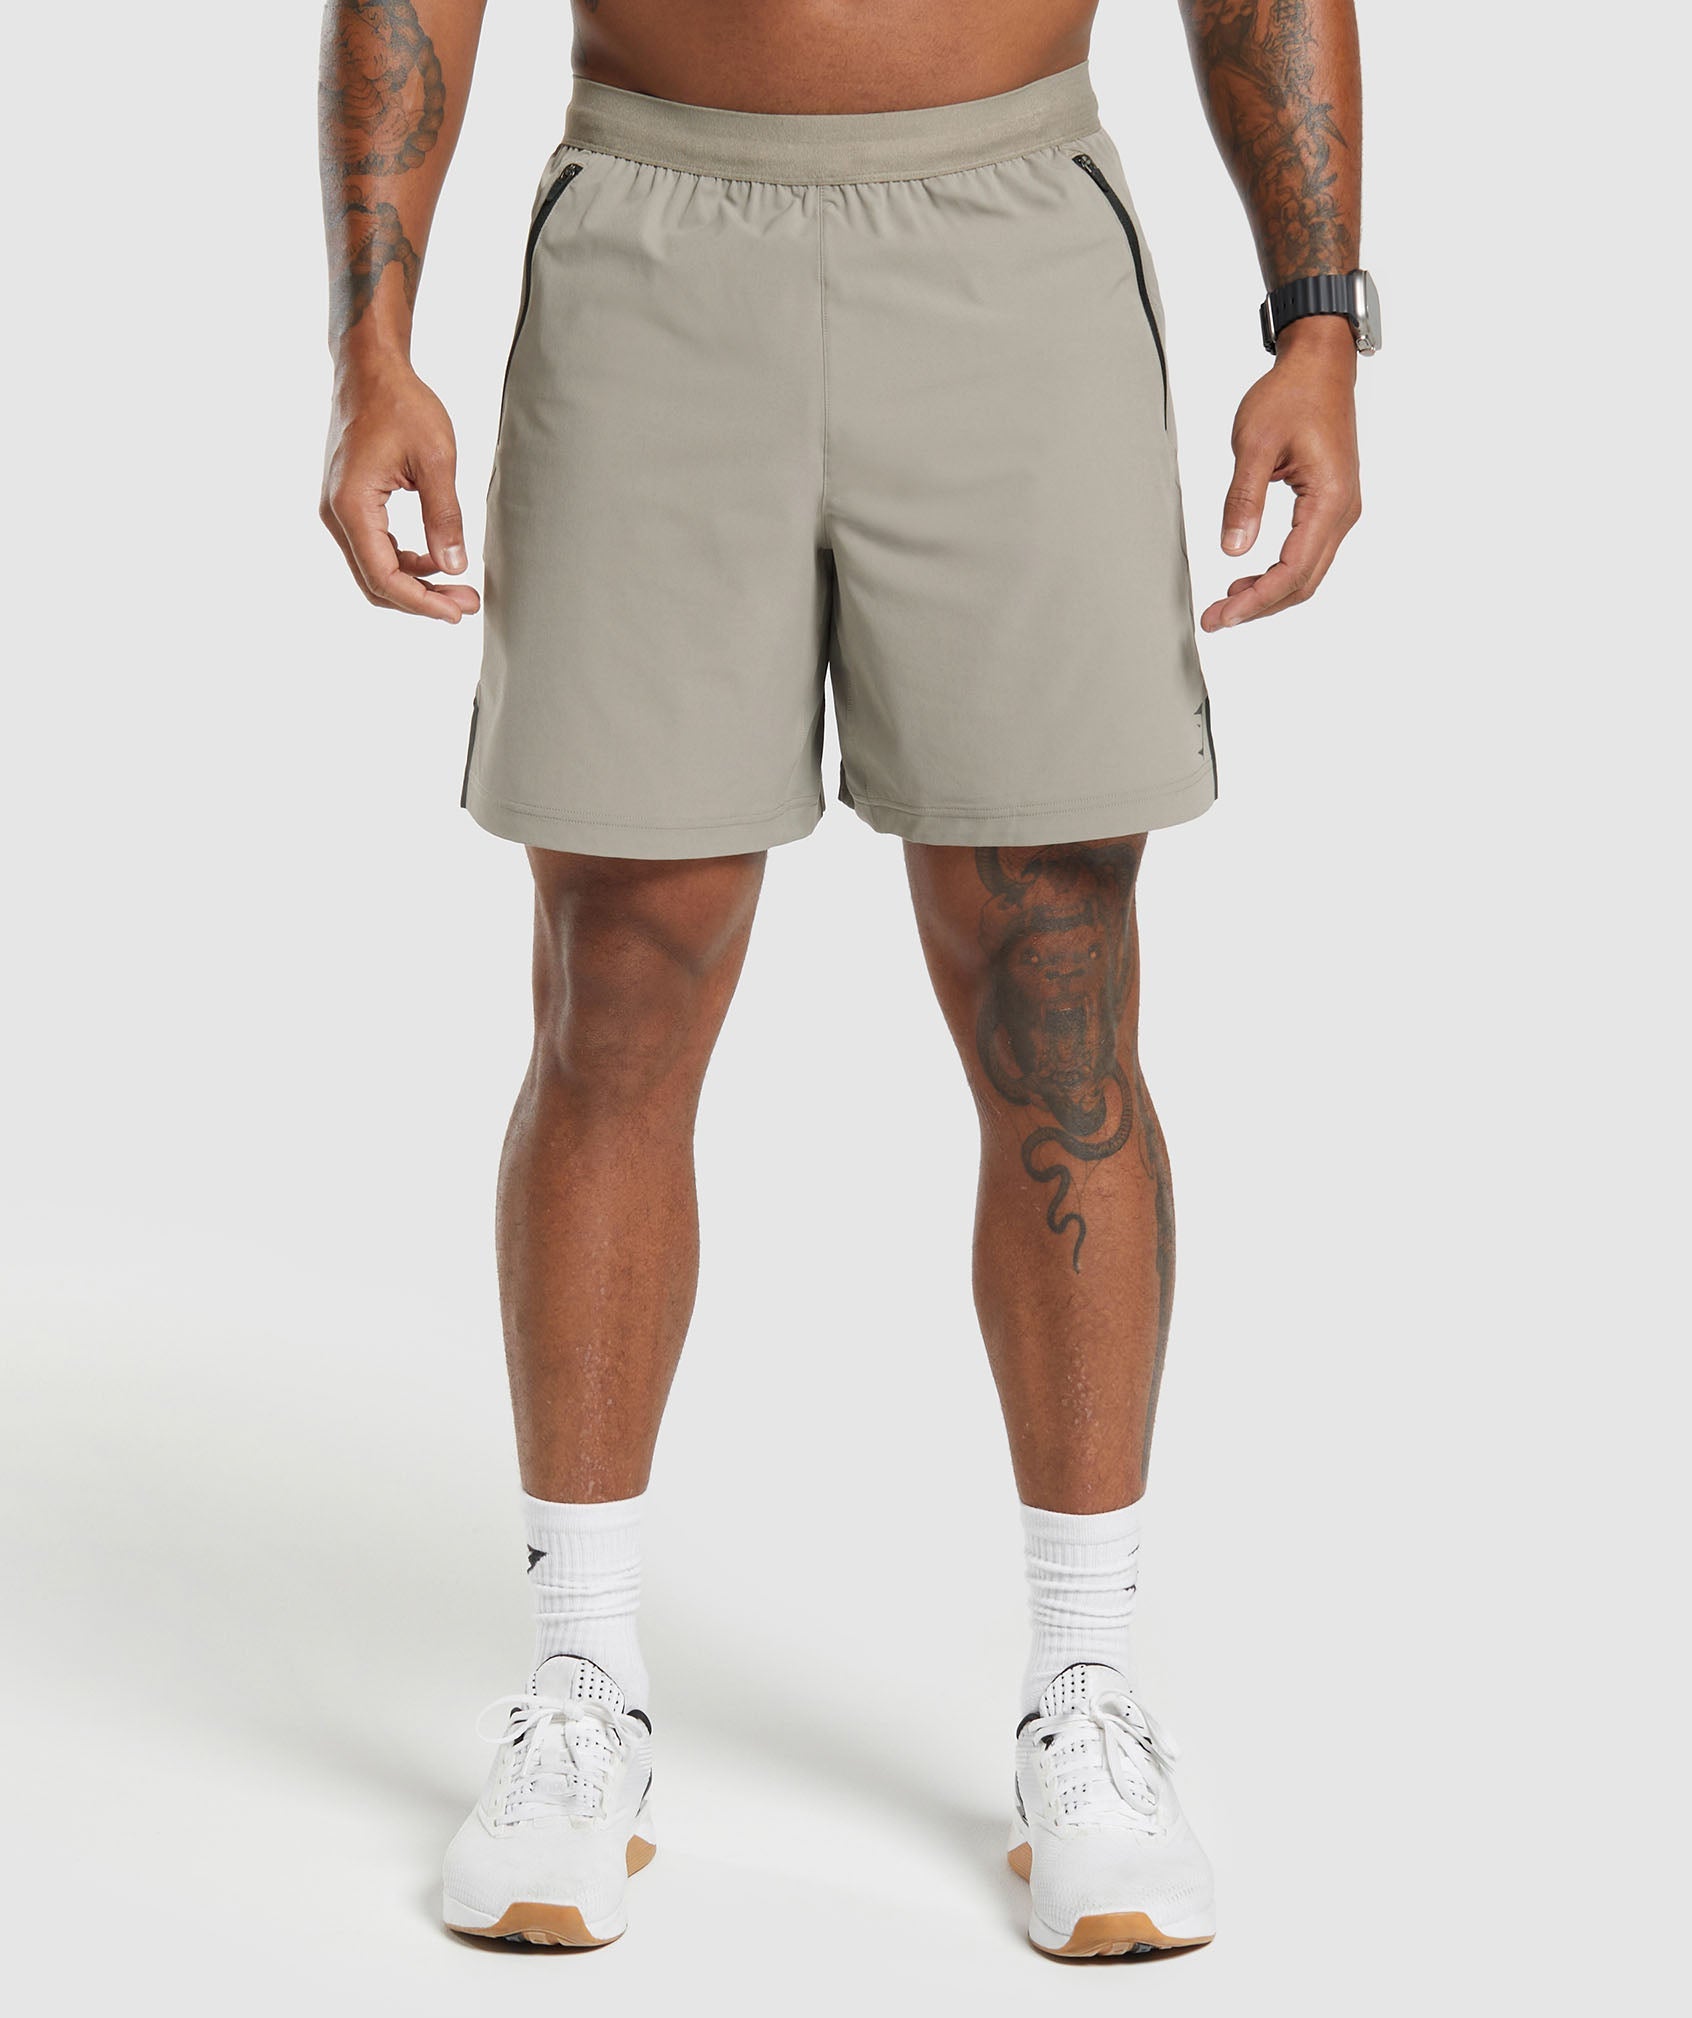 Apex 7" Hybrid Shorts in Linen Brown